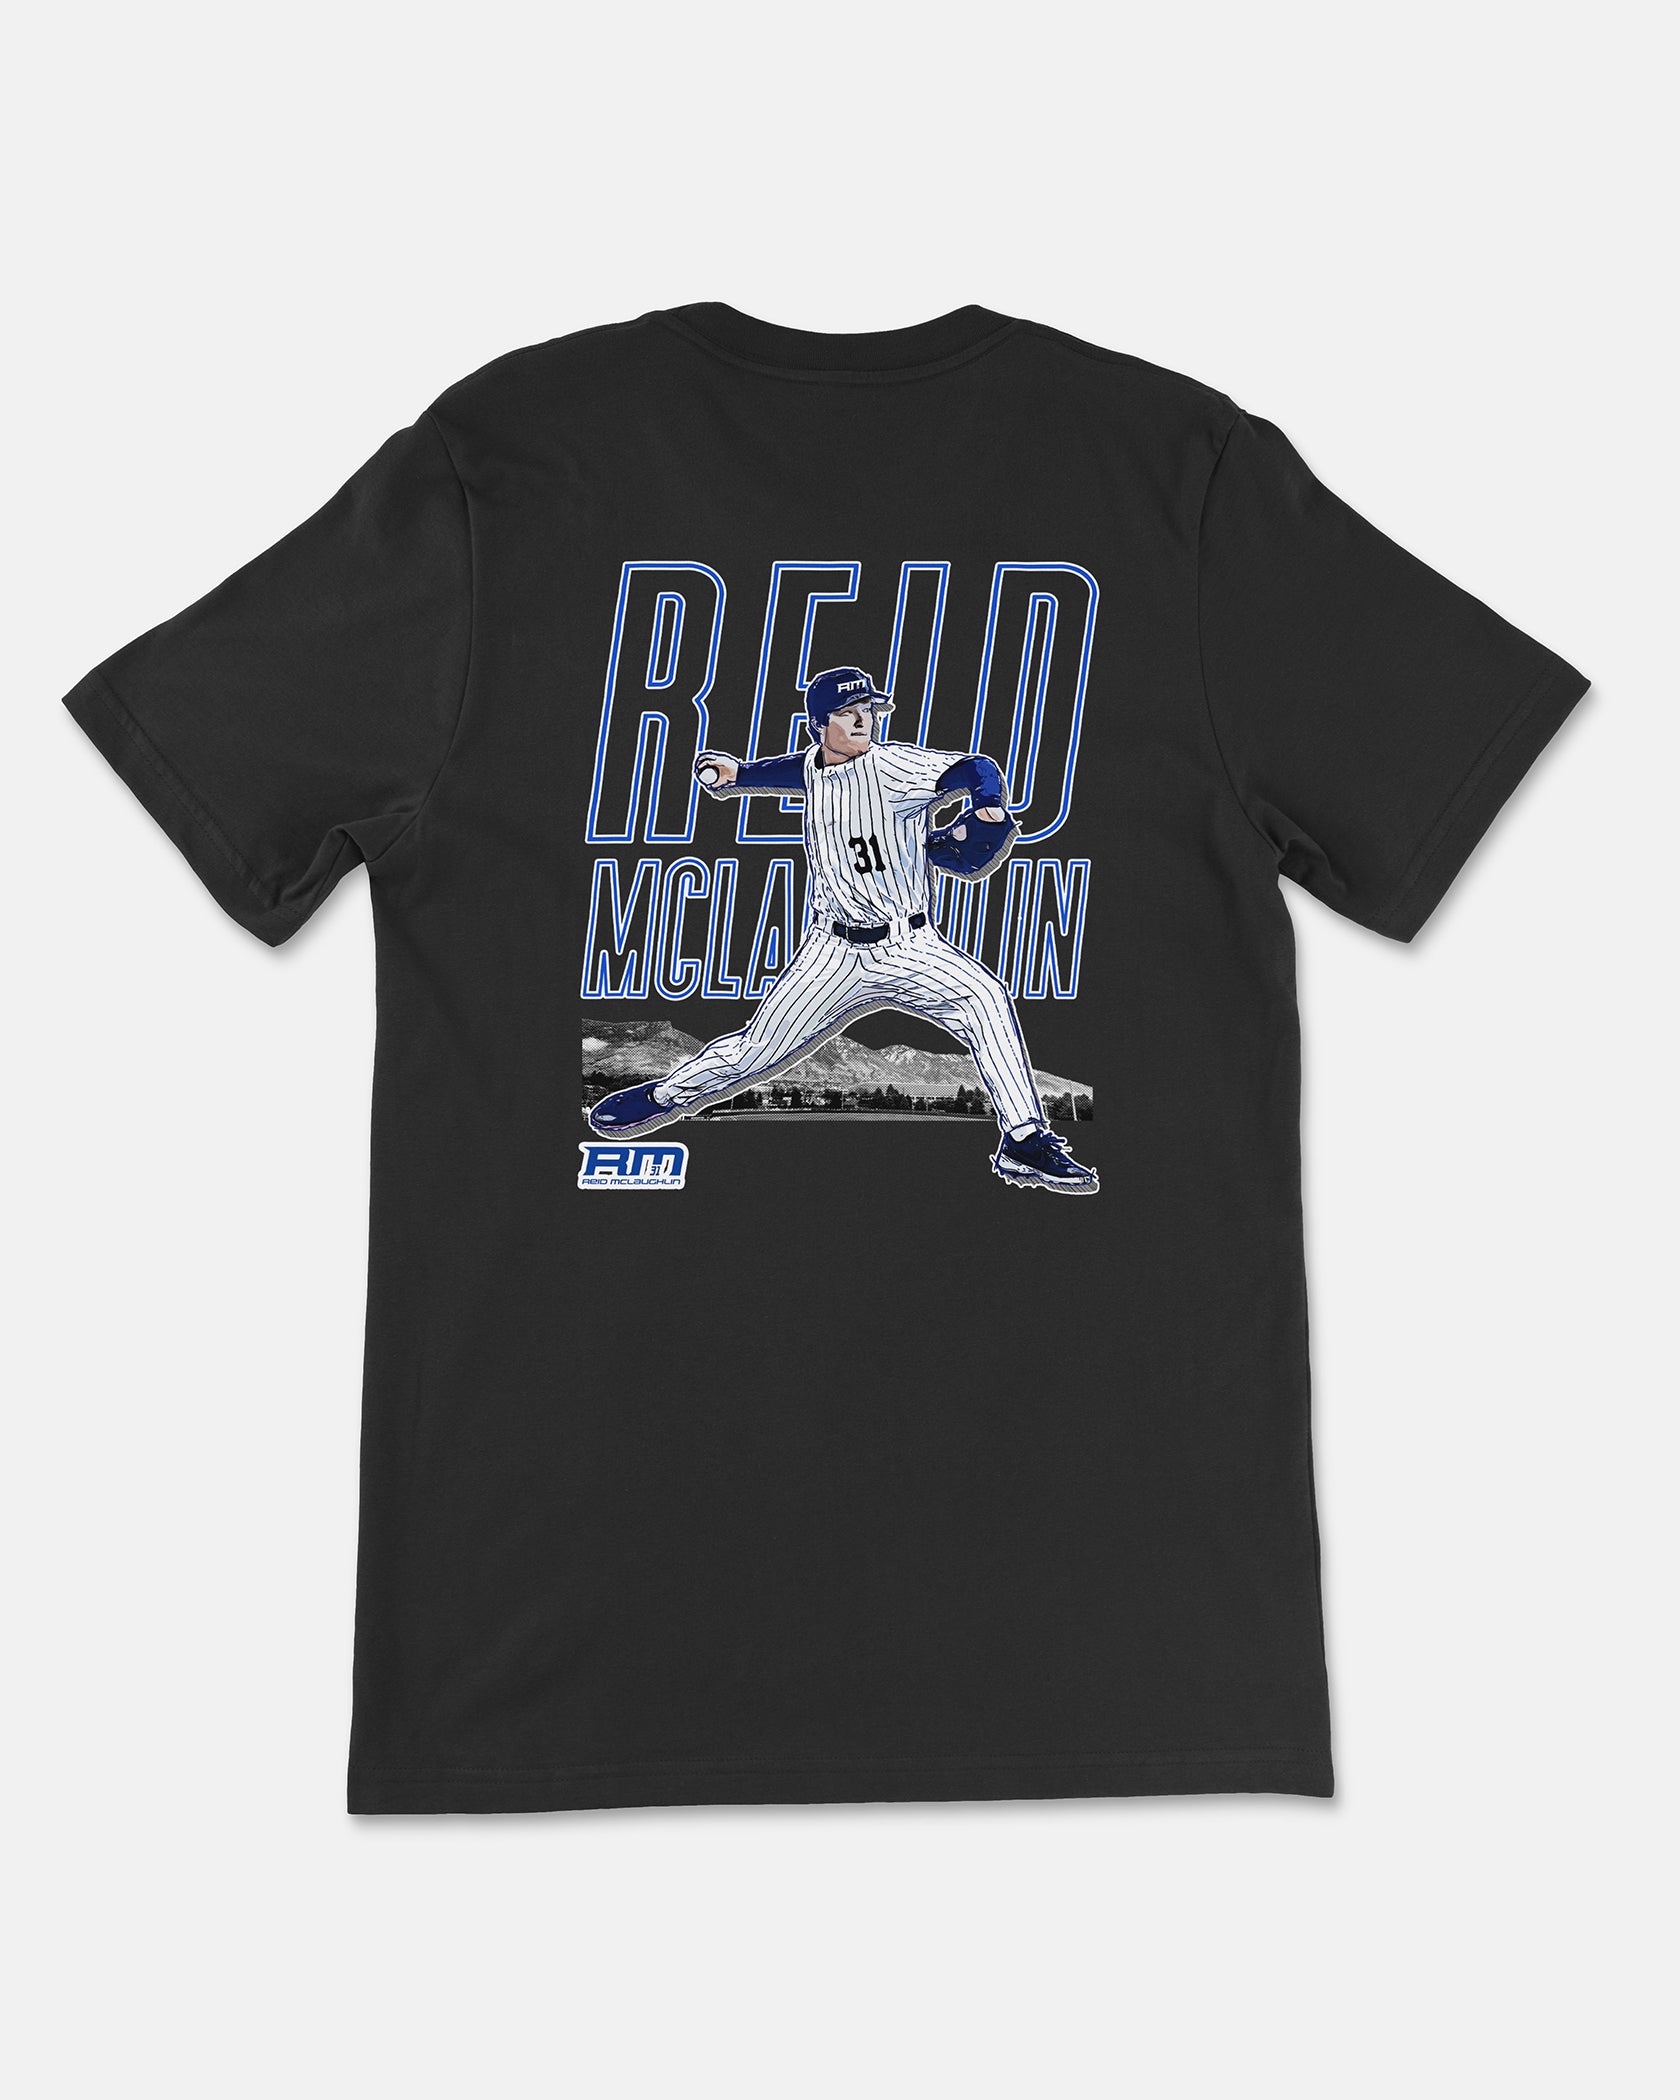 Reid McLaughlin Shirt 003